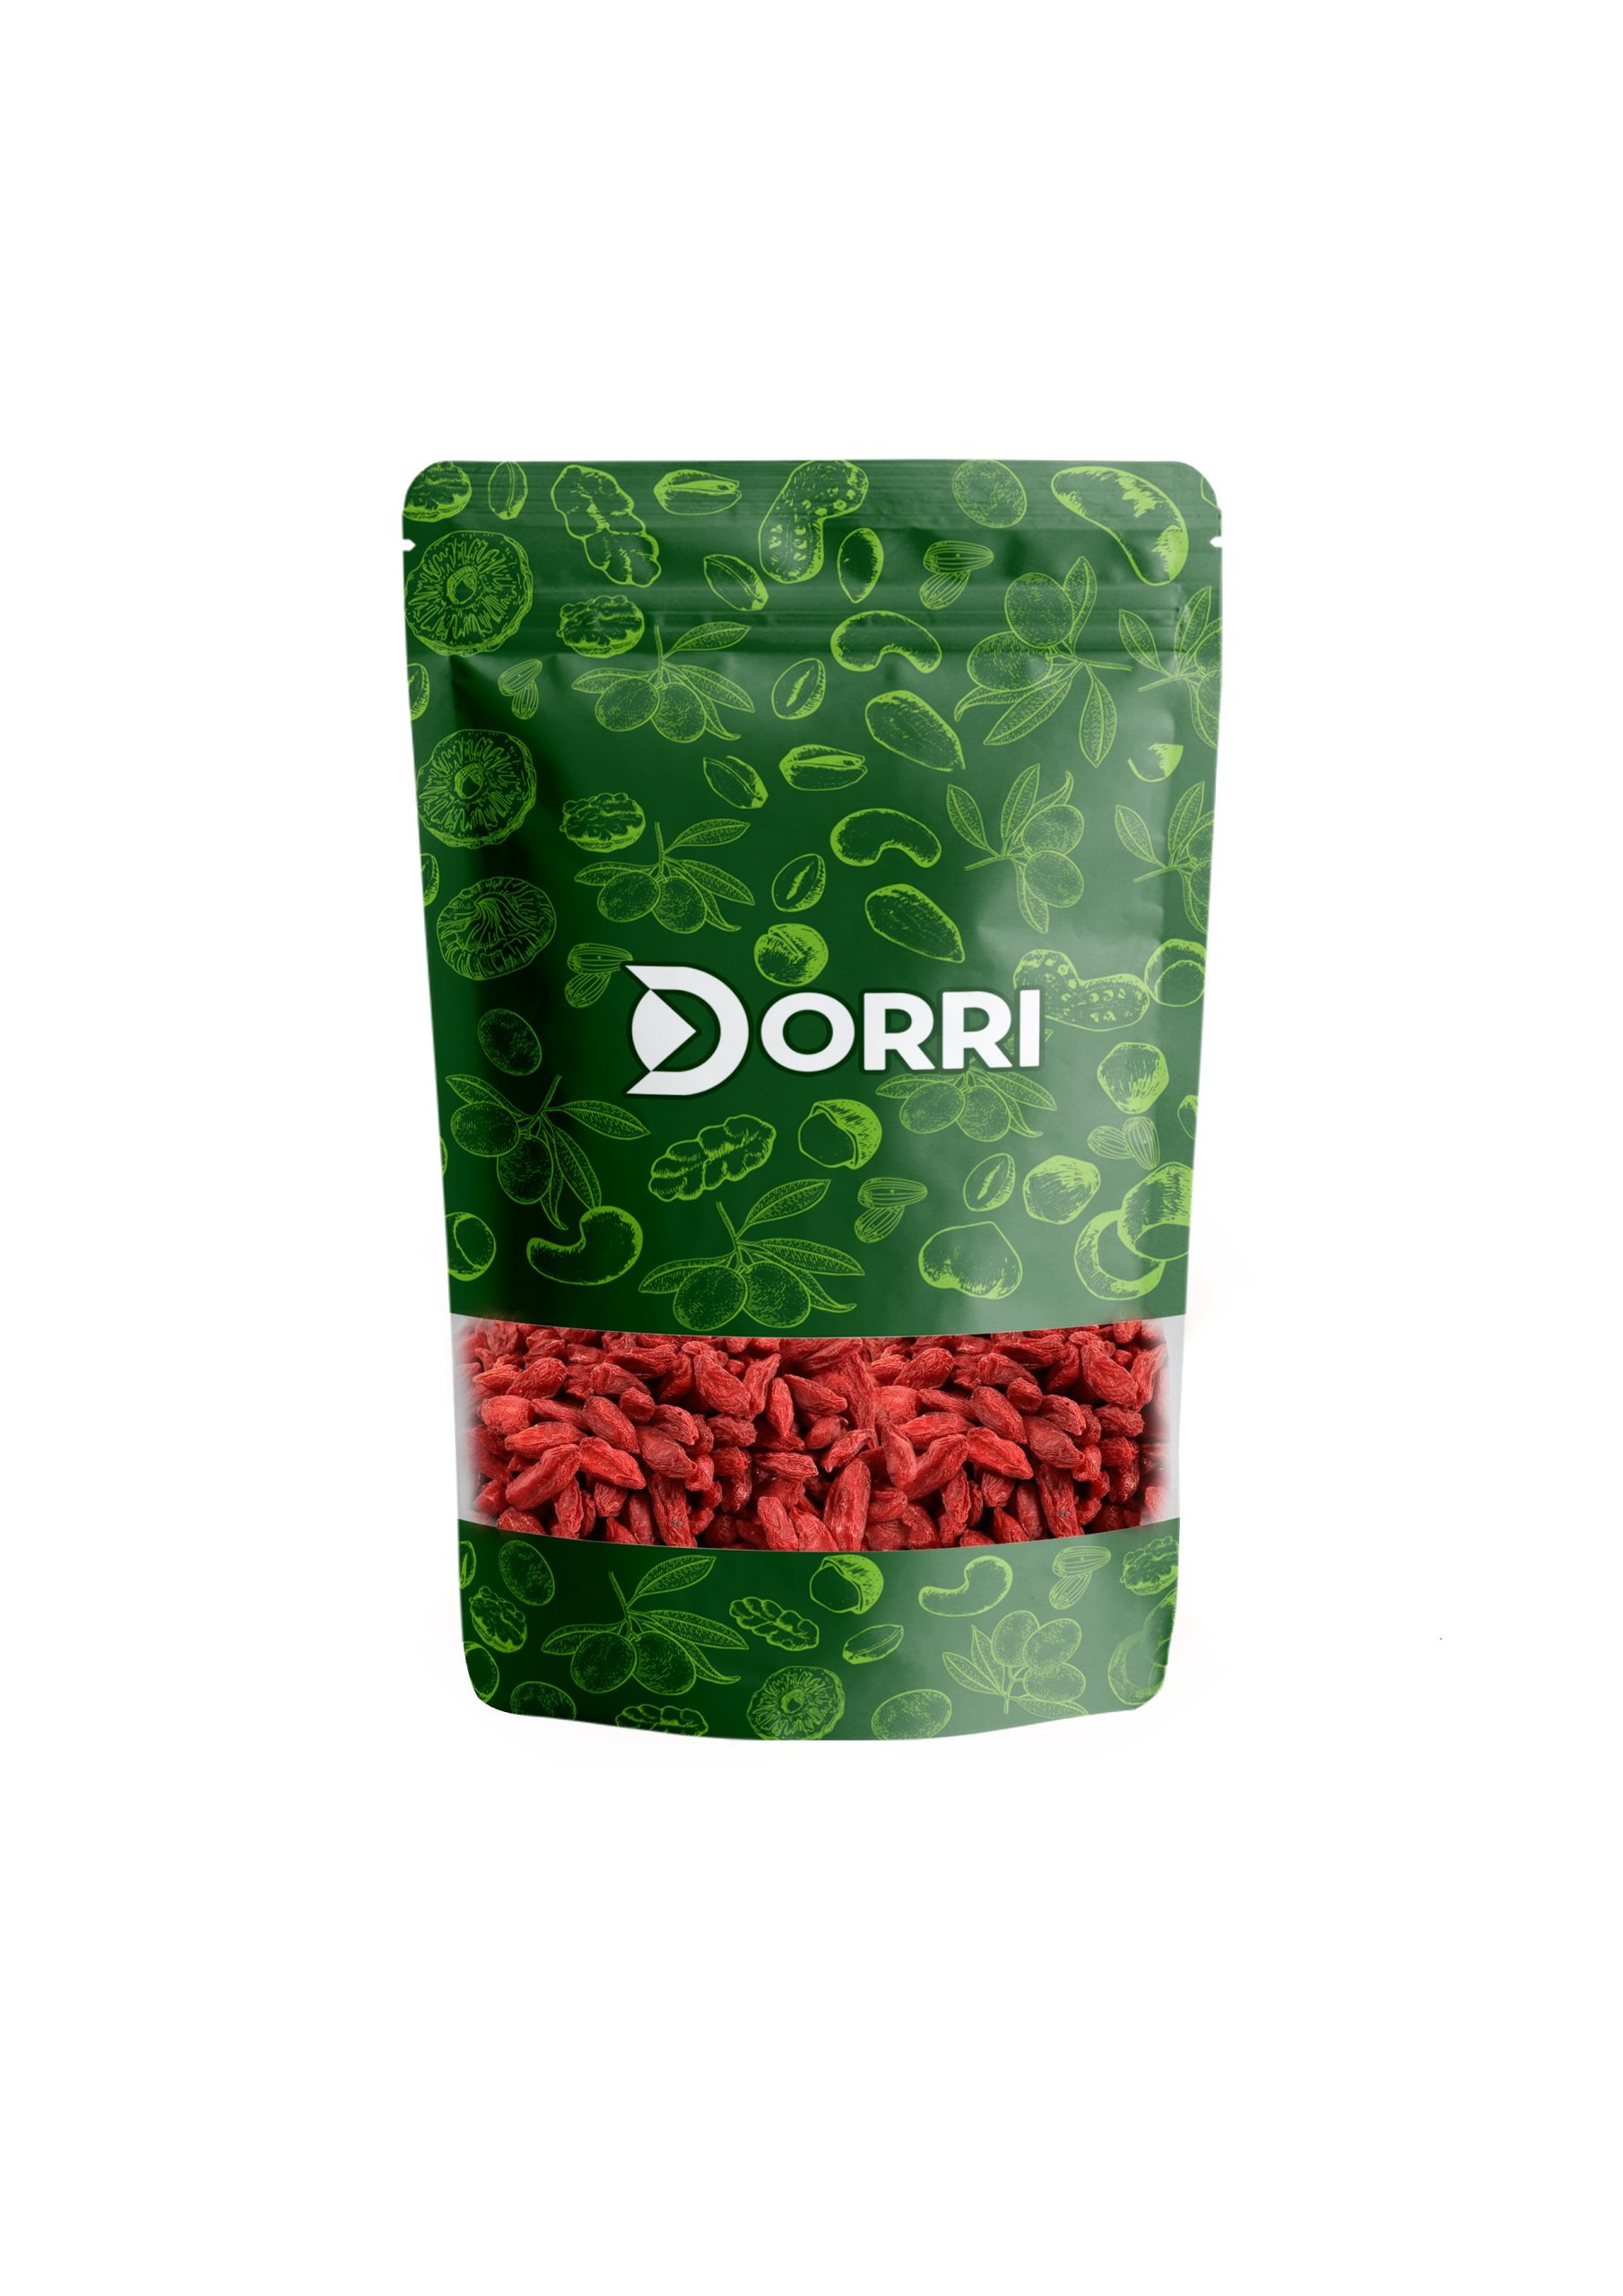 Dorri - Organic Goji Berries